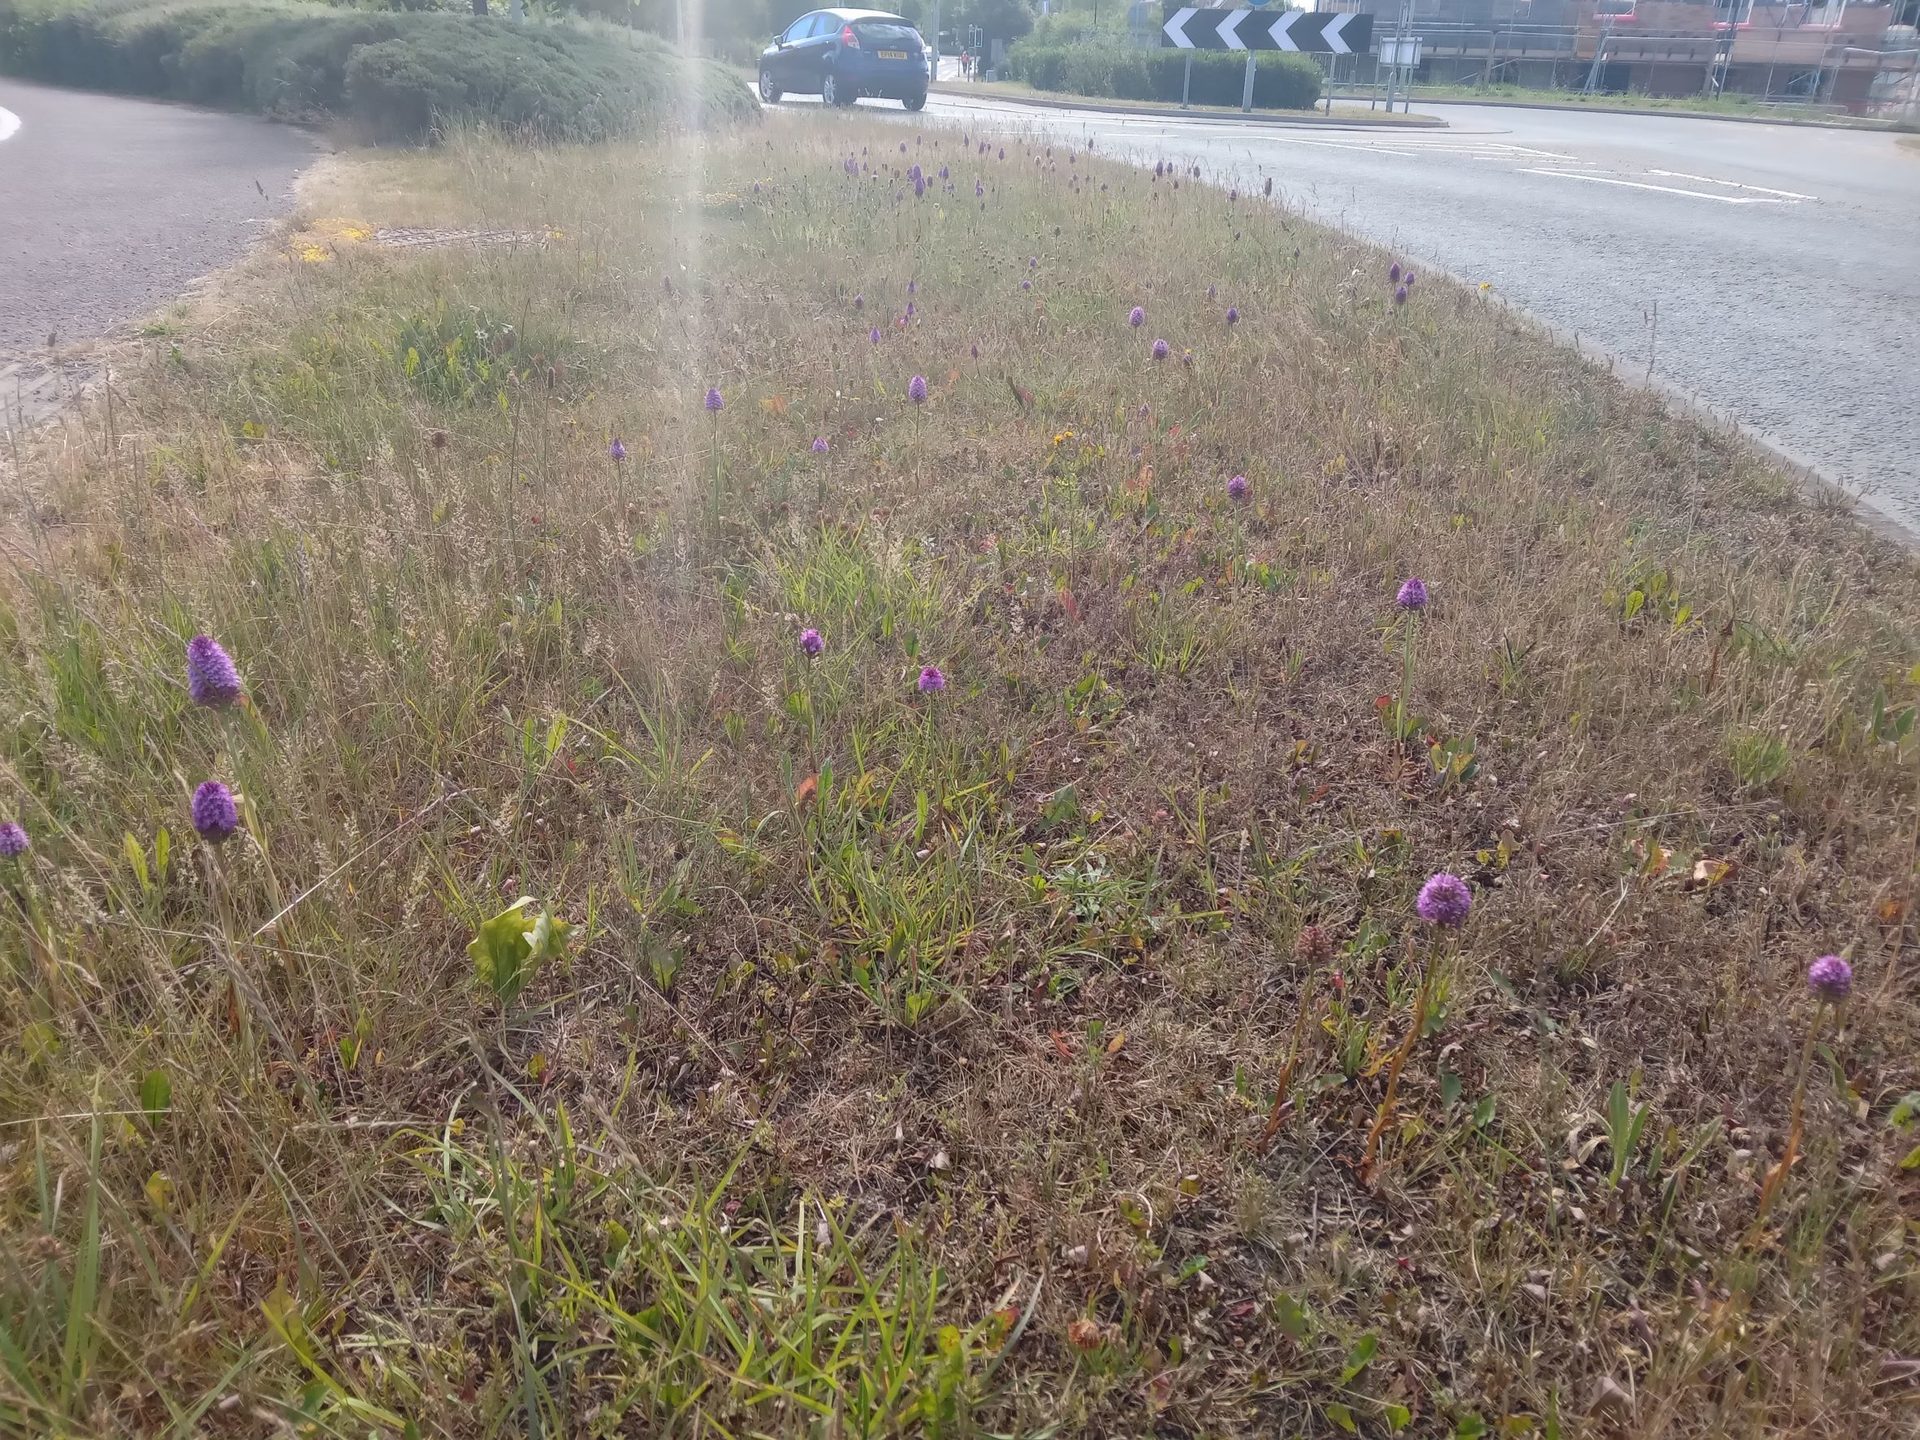 Road surface, Land lot, Plant, Asphalt, Grass